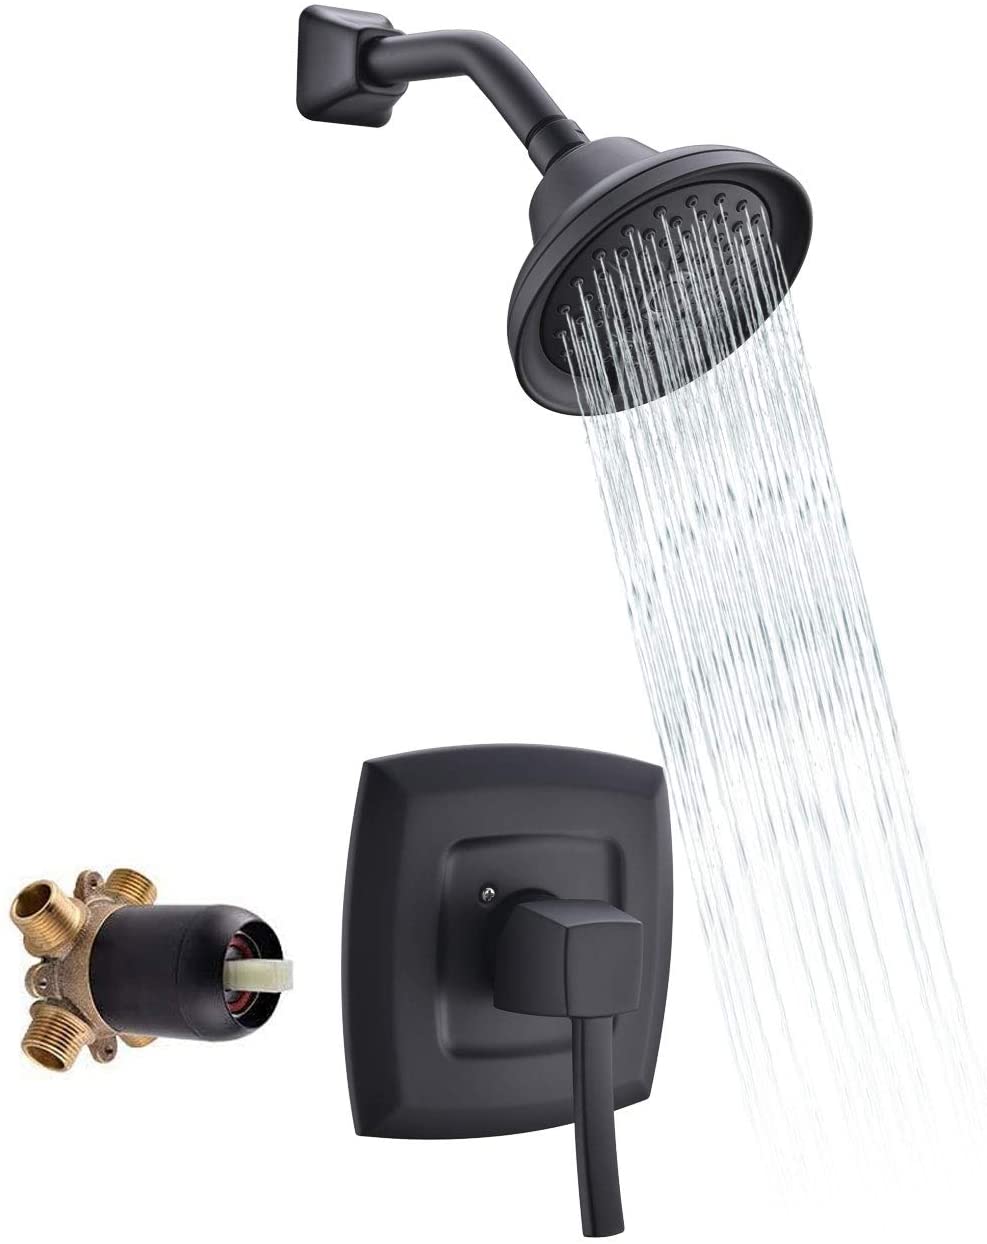 Juegos de grifos de baño Ducha de lluvia Mezclador de ducha oculto Juegos de ducha de baño